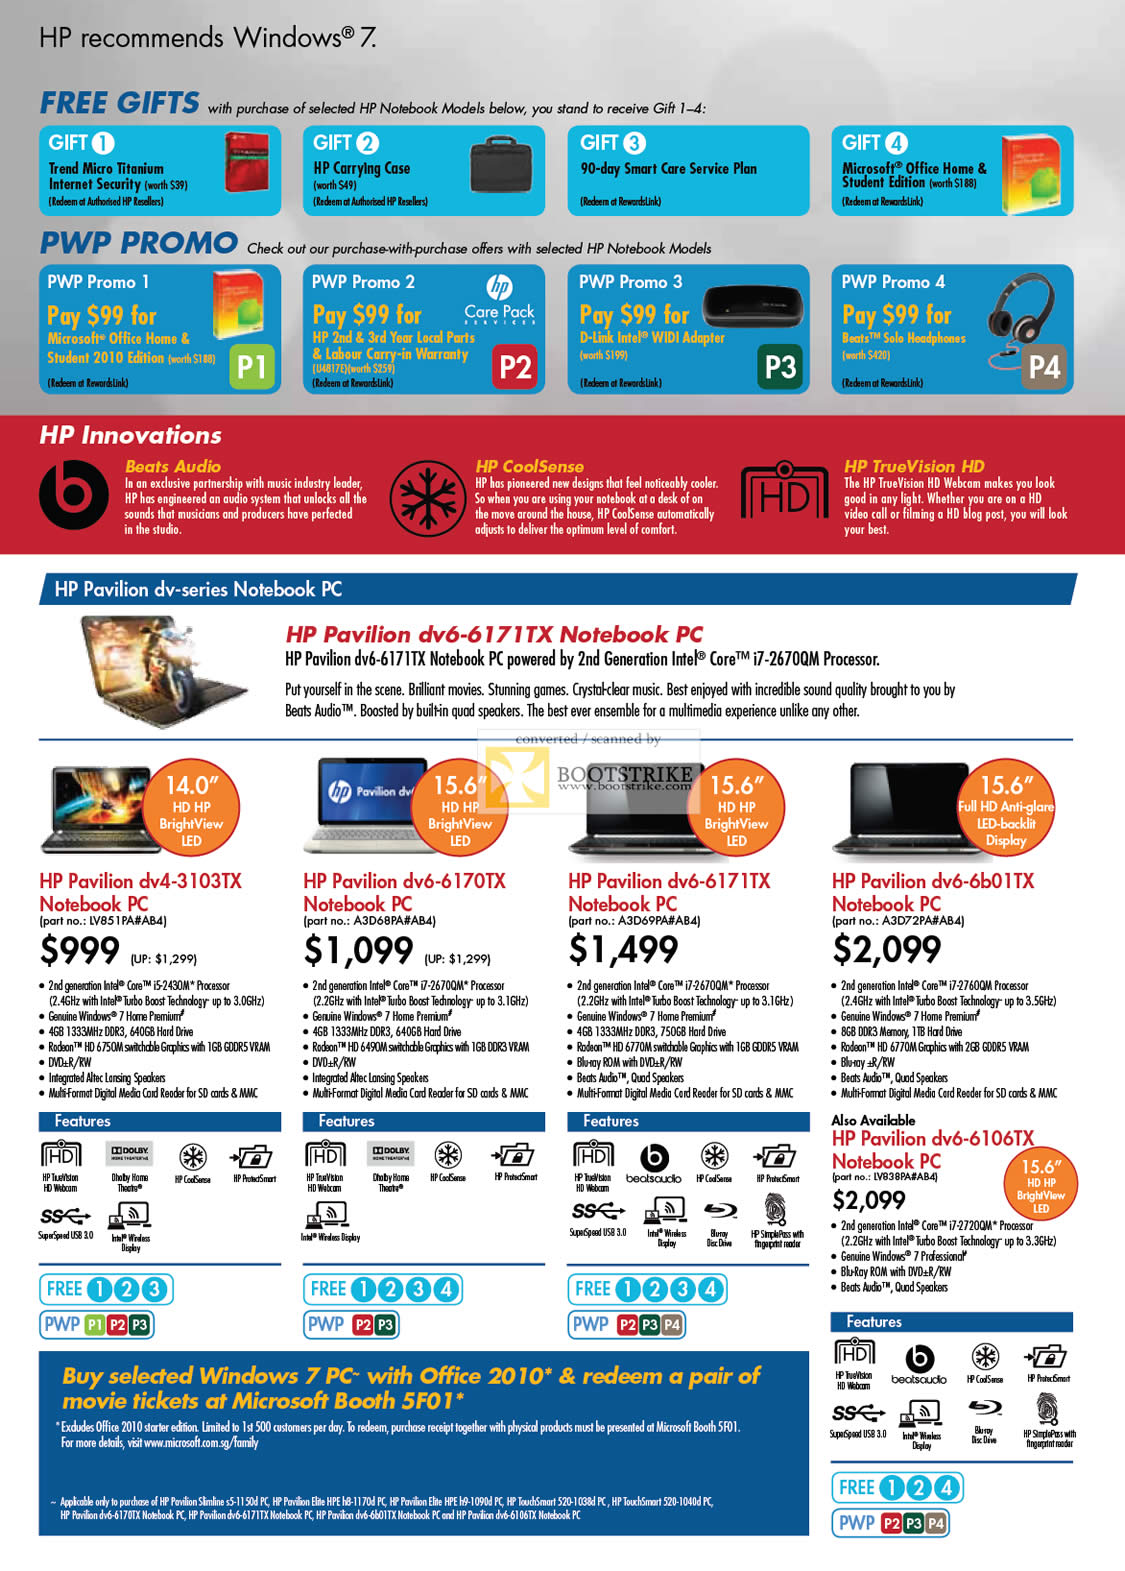 SITEX 2011 price list image brochure of HP Notebooks Pavilion DV4-3103TX, DV6-6170TX, DV6-6171TX, DV6-6B01TX, DV6-6106TX